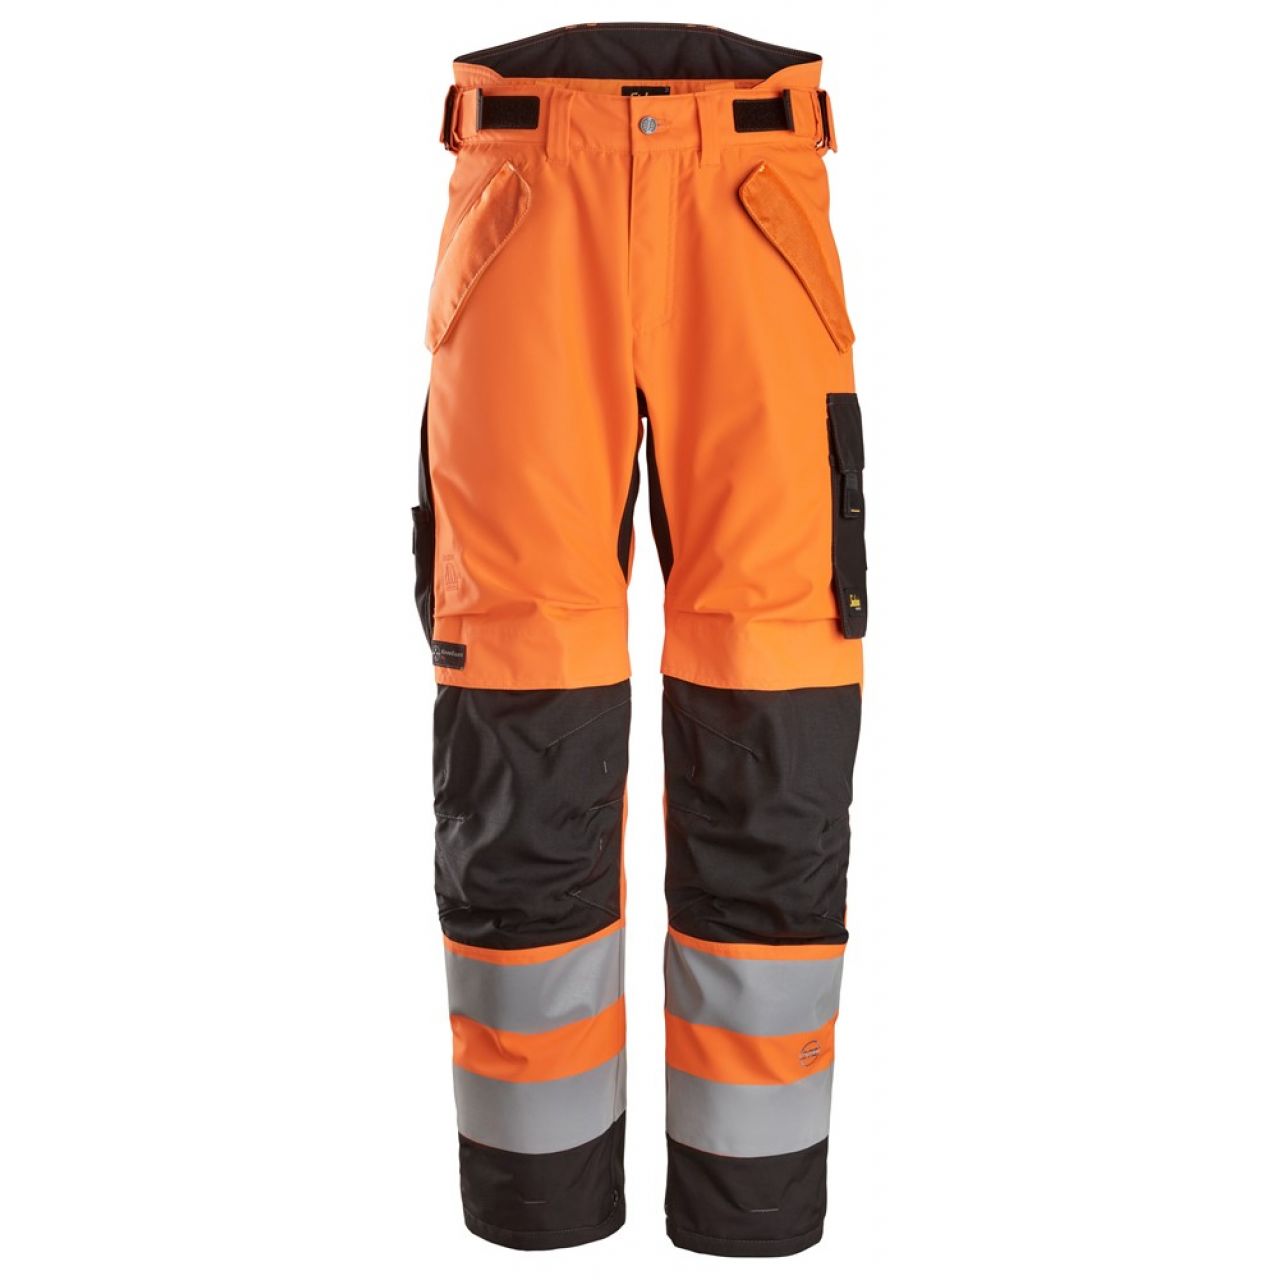 6630 Pantalones largos de trabajo impermeables de alta visibilidad clase 2 acolchados con doble capa 37.5® naranja-negro talla S